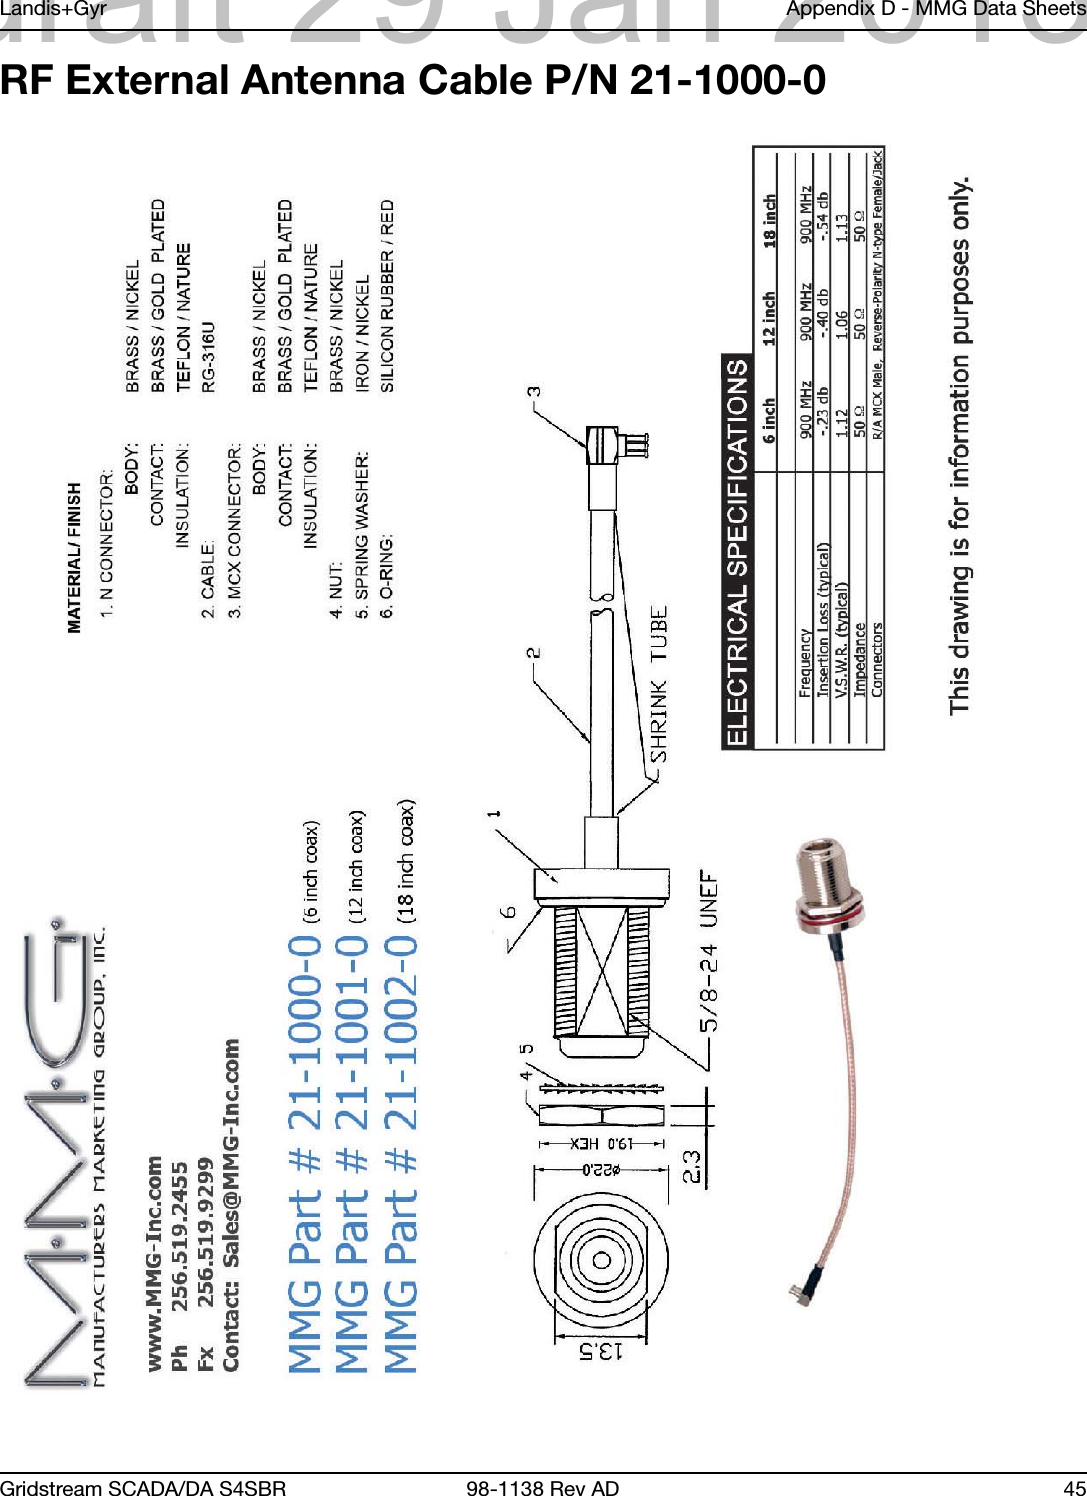 Landis+Gyr Appendix D - MMG Data SheetsGridstream SCADA/DA S4SBR 98-1138 Rev AD 45RF External Antenna Cable P/N 21-1000-0draft 29 Jan 2013